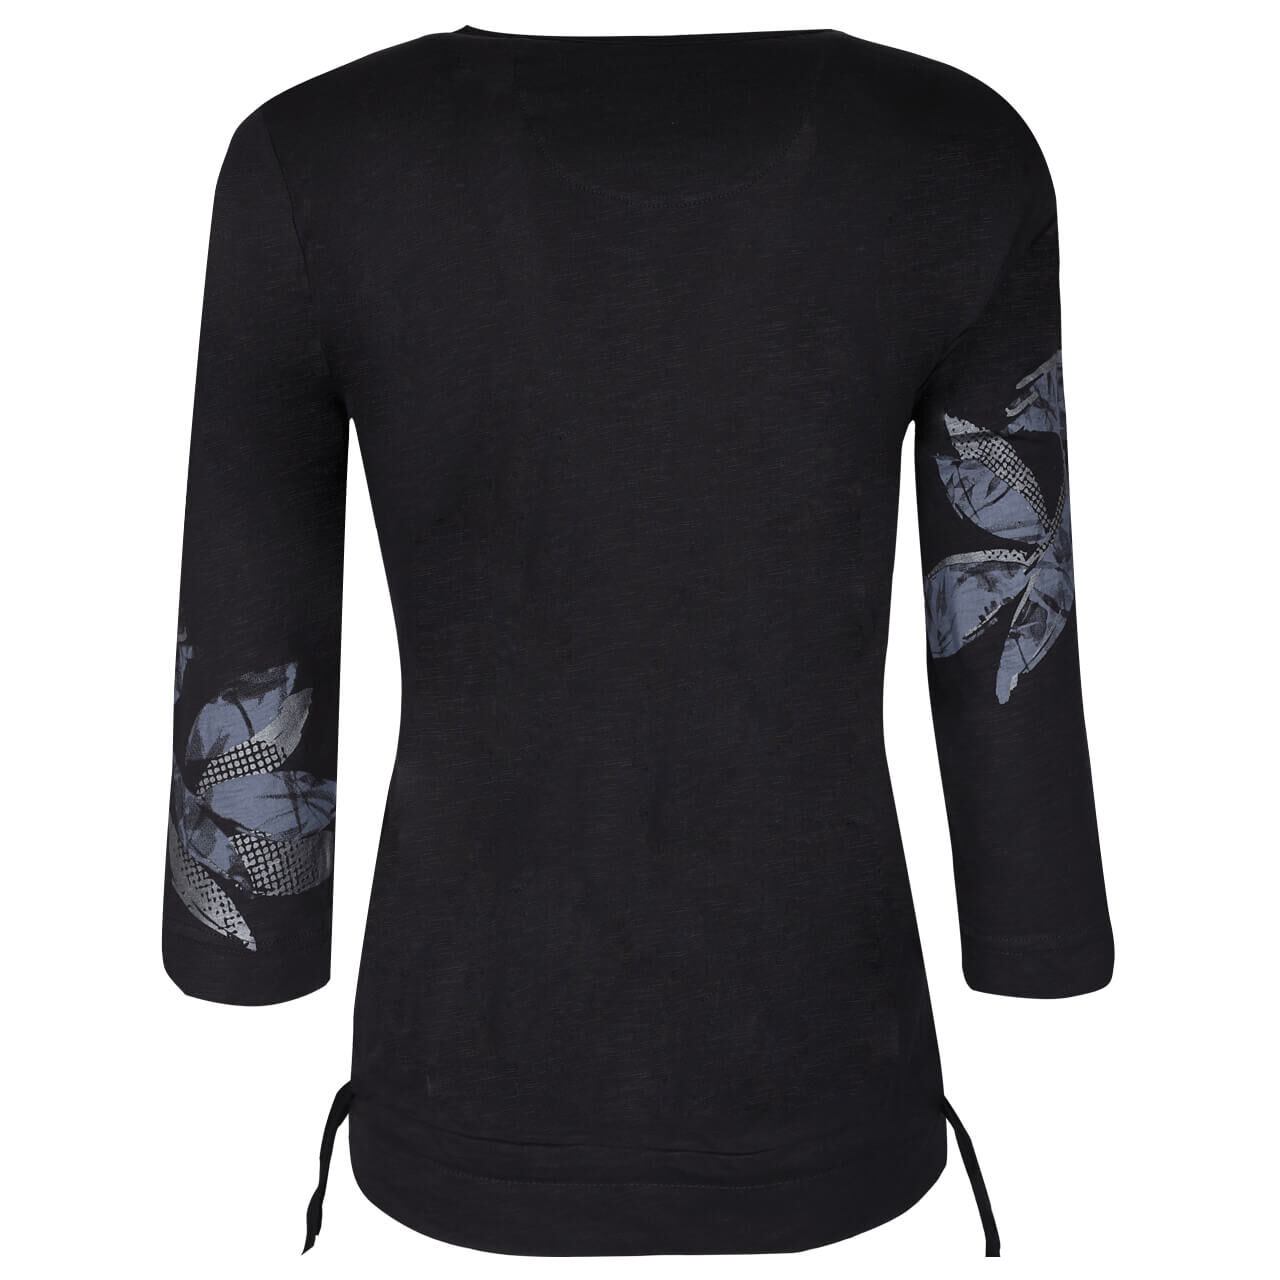 Soquesto Damen 3/4 Arm Shirt black printed